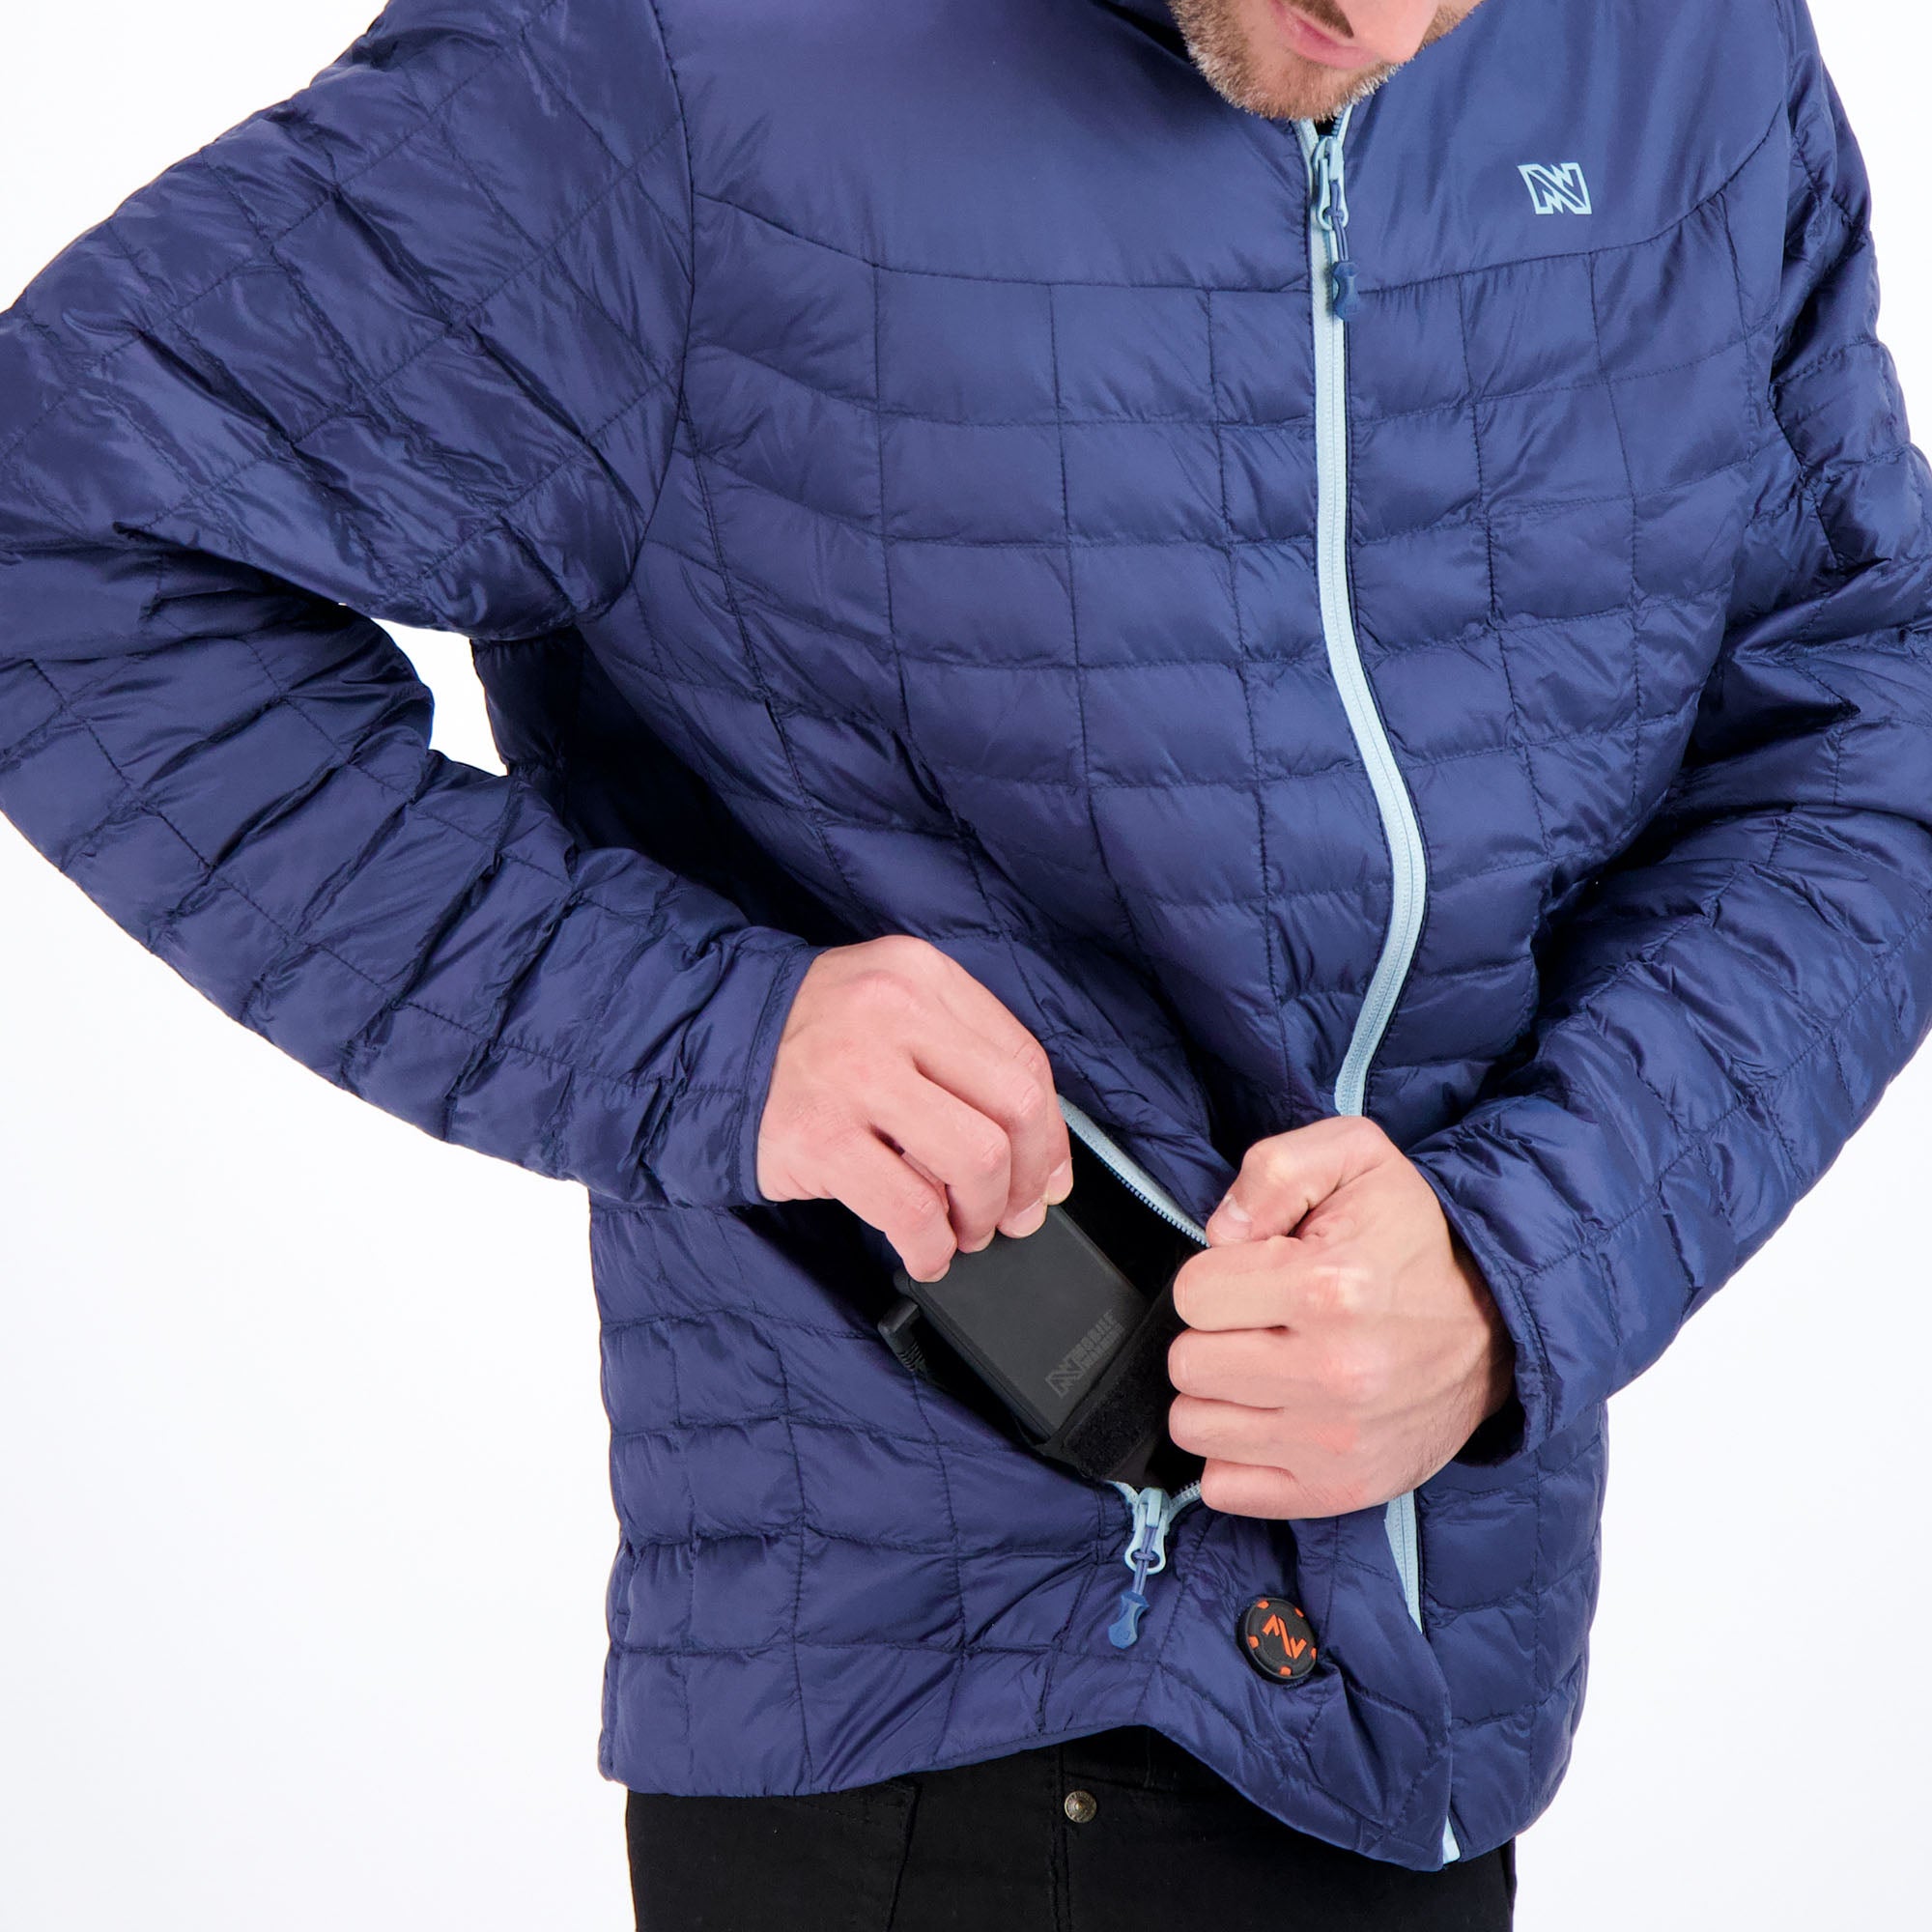 Manteau chauffant Backcountry - Homme||Backcountry heated jacket - Men’s